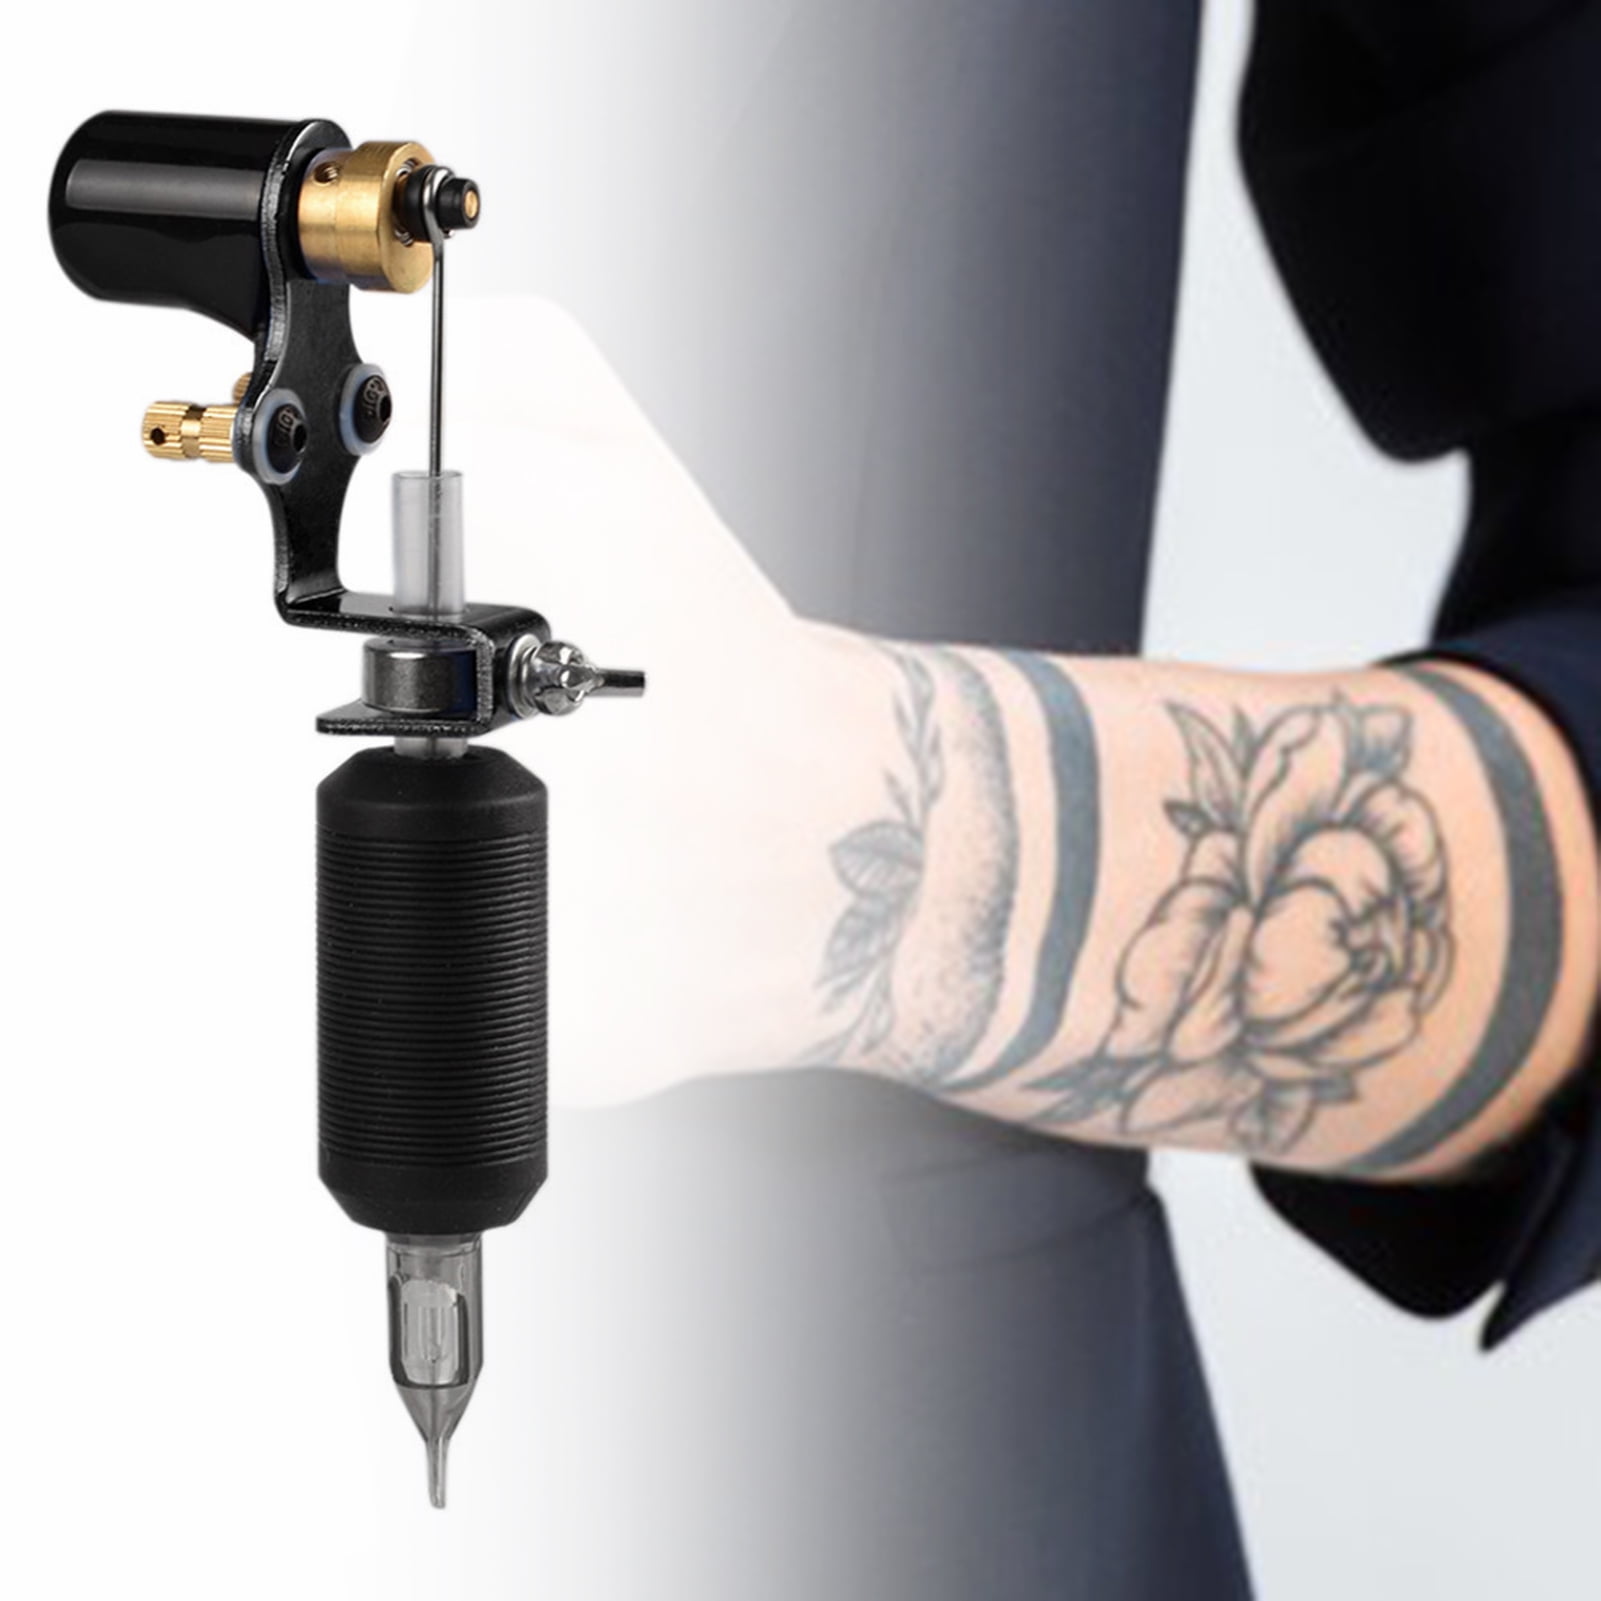 Realistic 3d Oilfield Drill Mens Forearm Tattoo Designs | Tattoos for guys,  Tattoos, Mens forearm tattoos designs